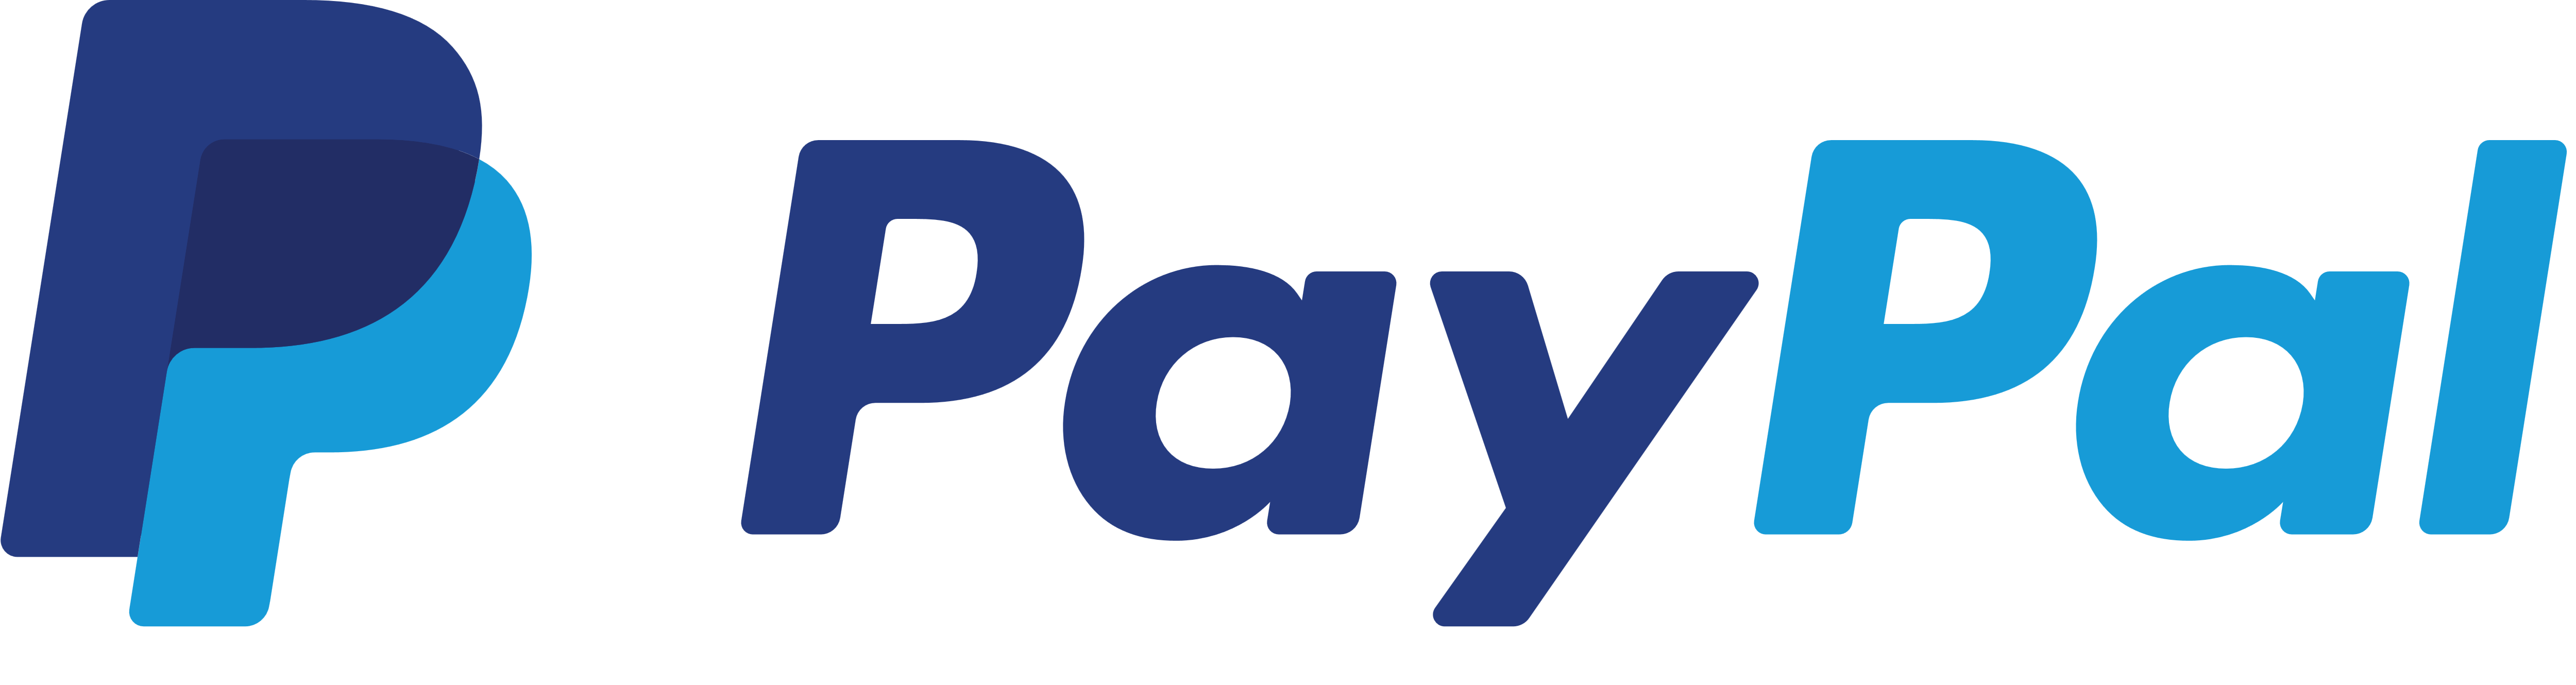 http://www.site2021.x-br.com/wp-content/uploads/2021/09/PayPal_logo_logotype_emblem.png